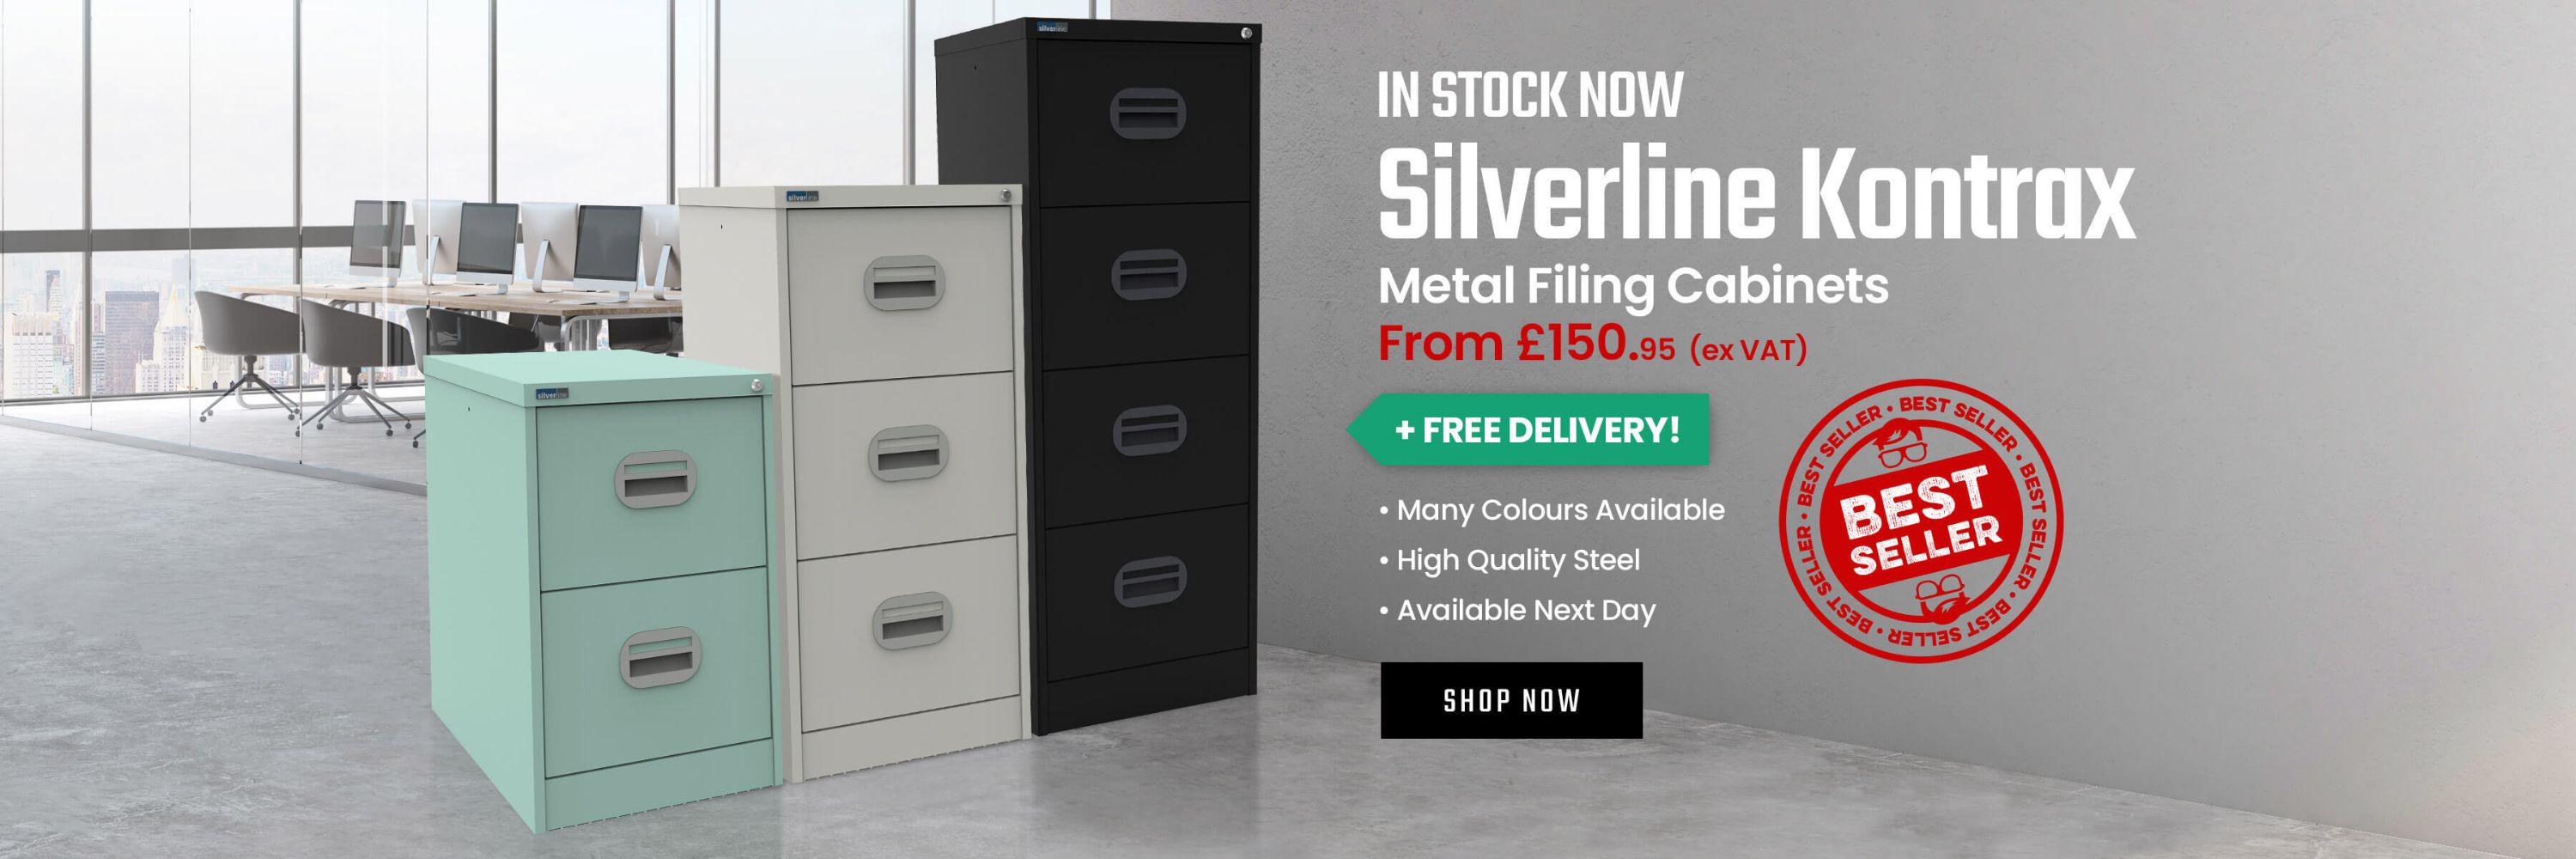 Silverline Kontrax Metal Filing Cabinets